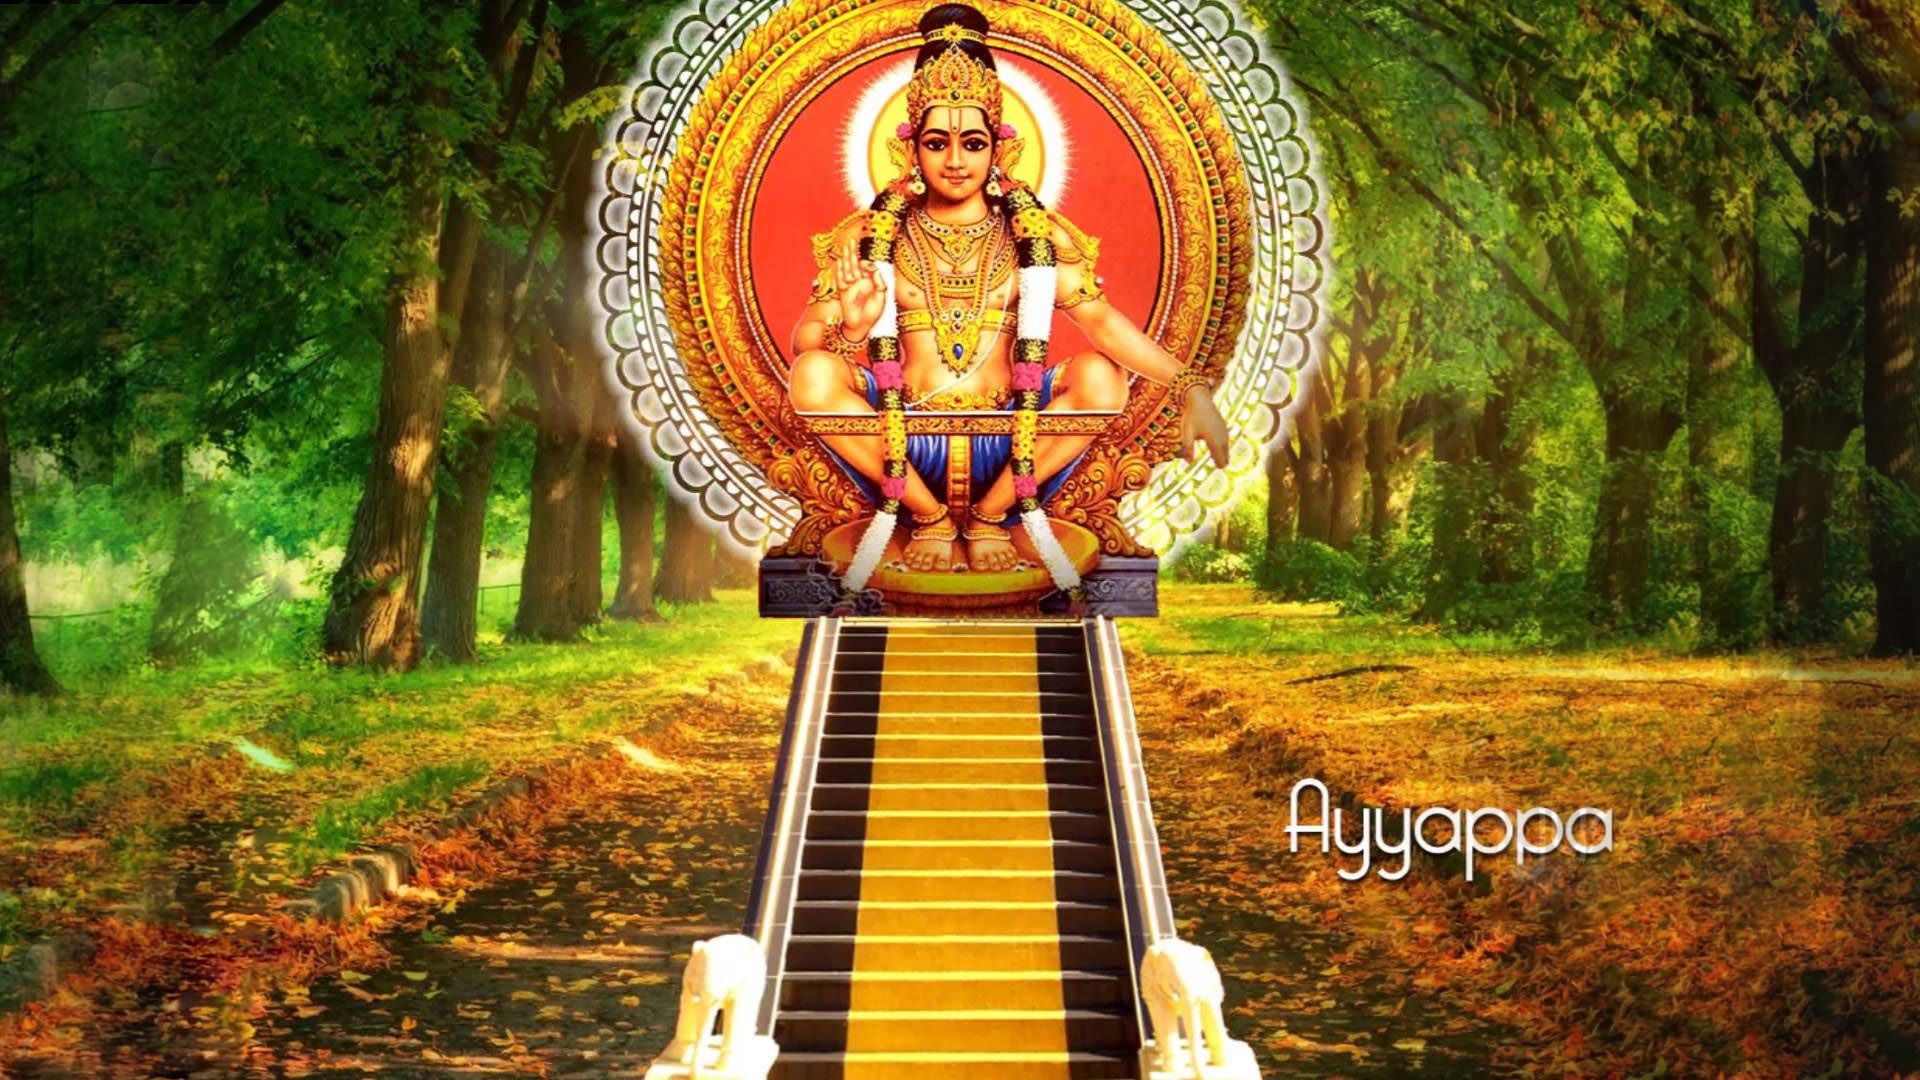 Ayyappa Swamy Image HD 1080p Download. Hindu Gods and Goddesses